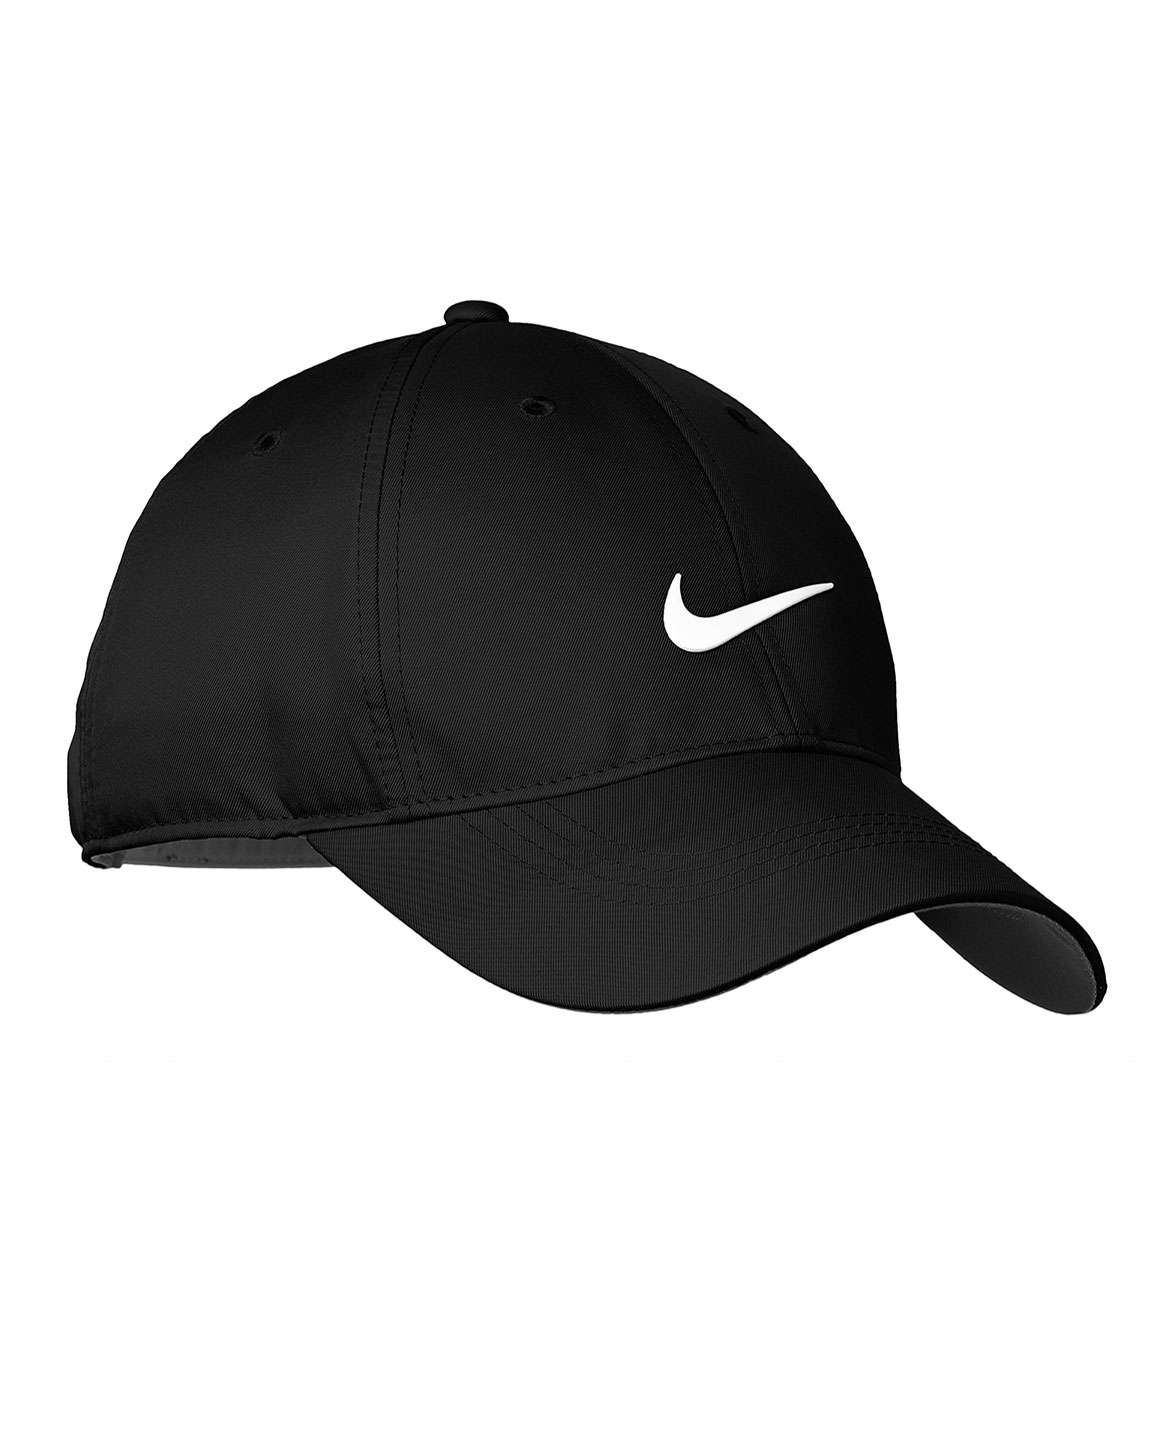 Nike Golf 548533 Dri-FIT Swoosh Front Cap